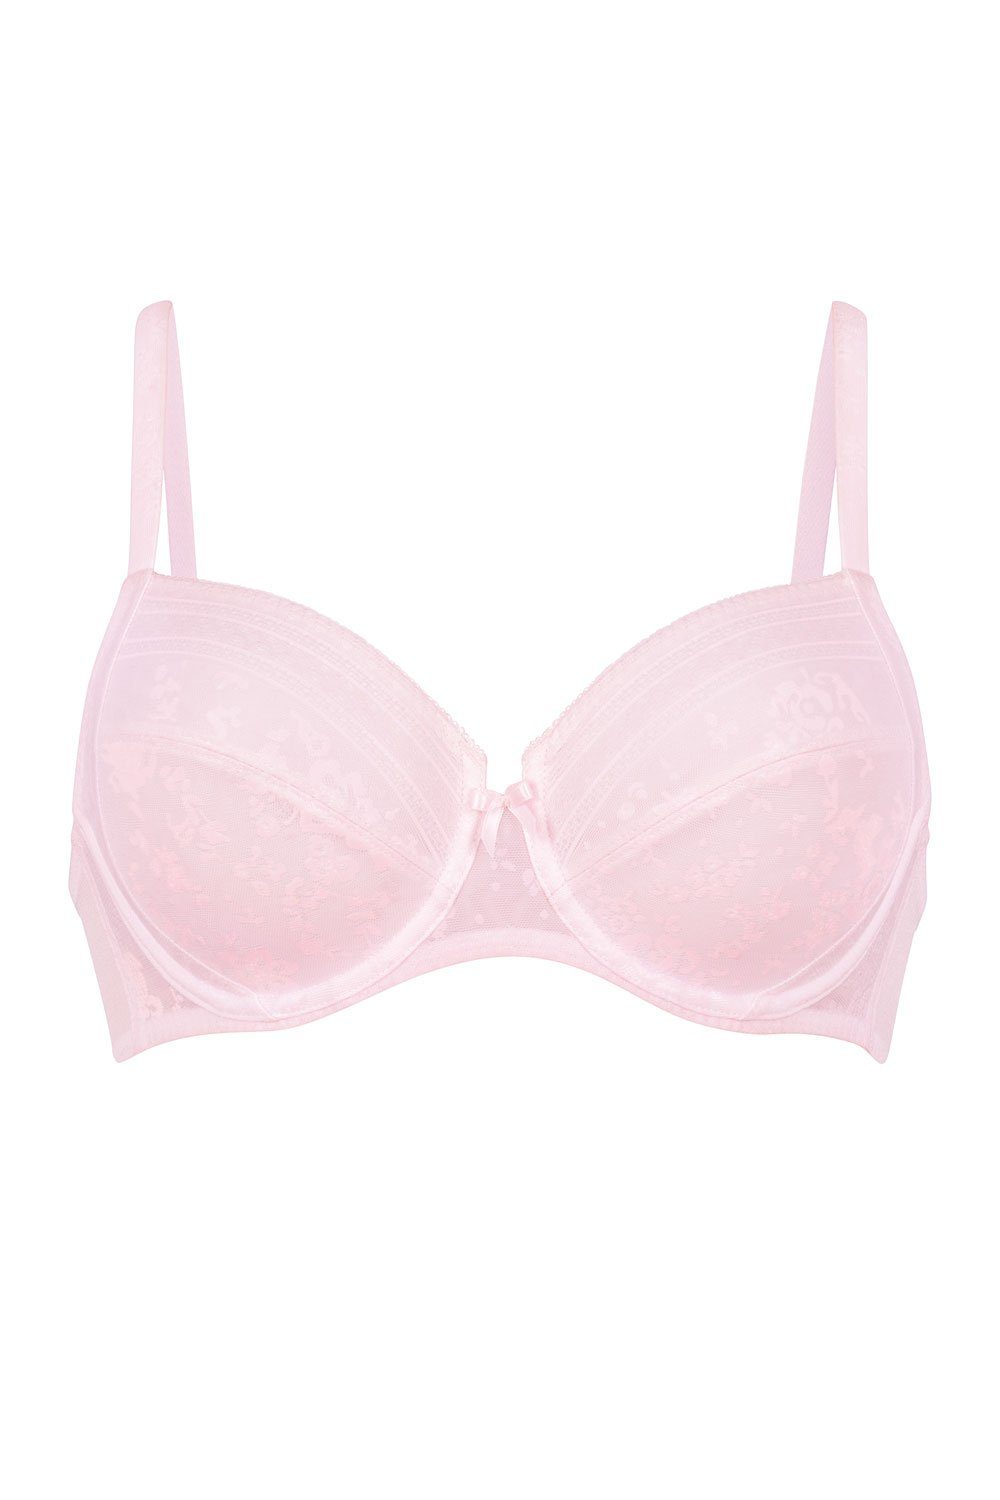 Rosa Bügel-BH 5653 Bügel-BH Faia blush pink